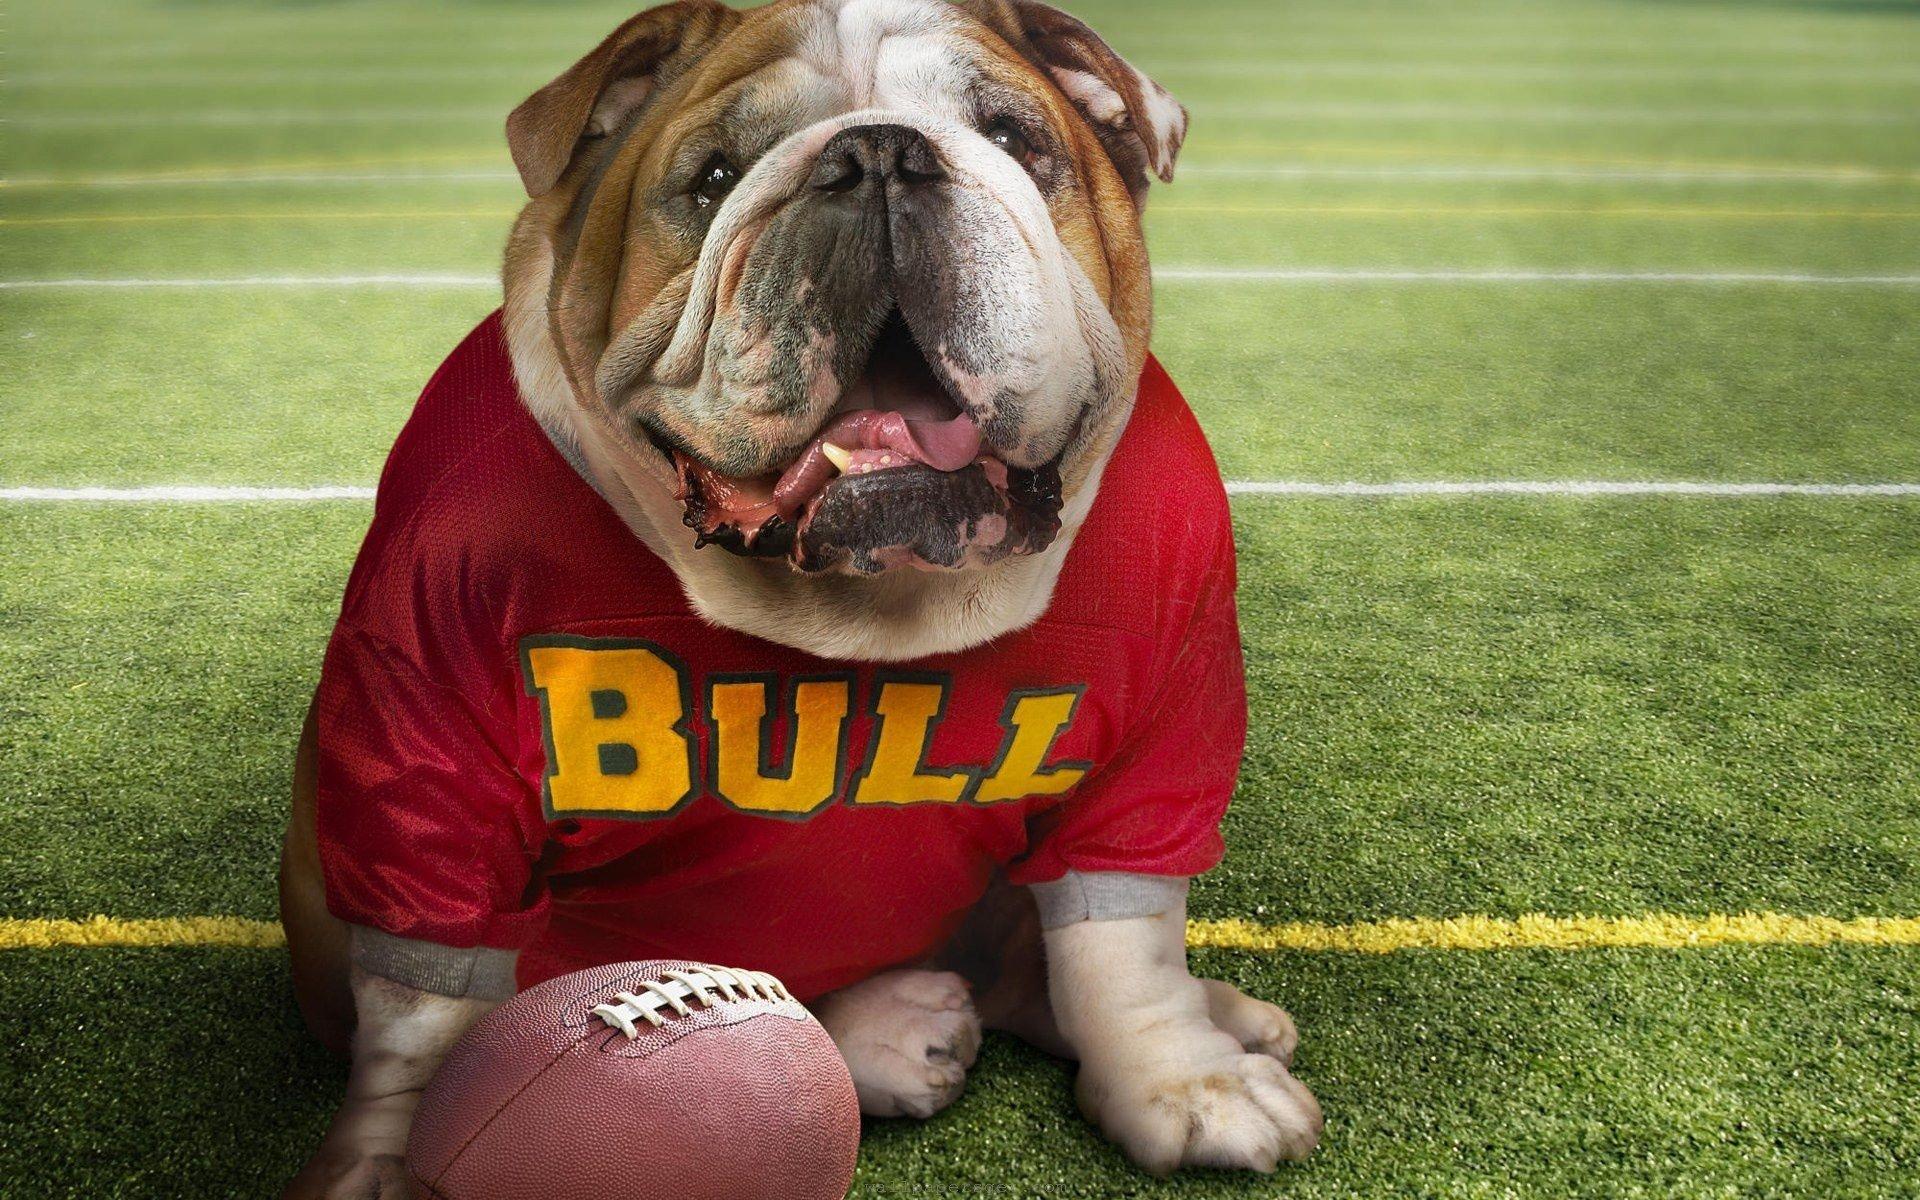 Georgia Bulldogs wallpaper HD for desktop background